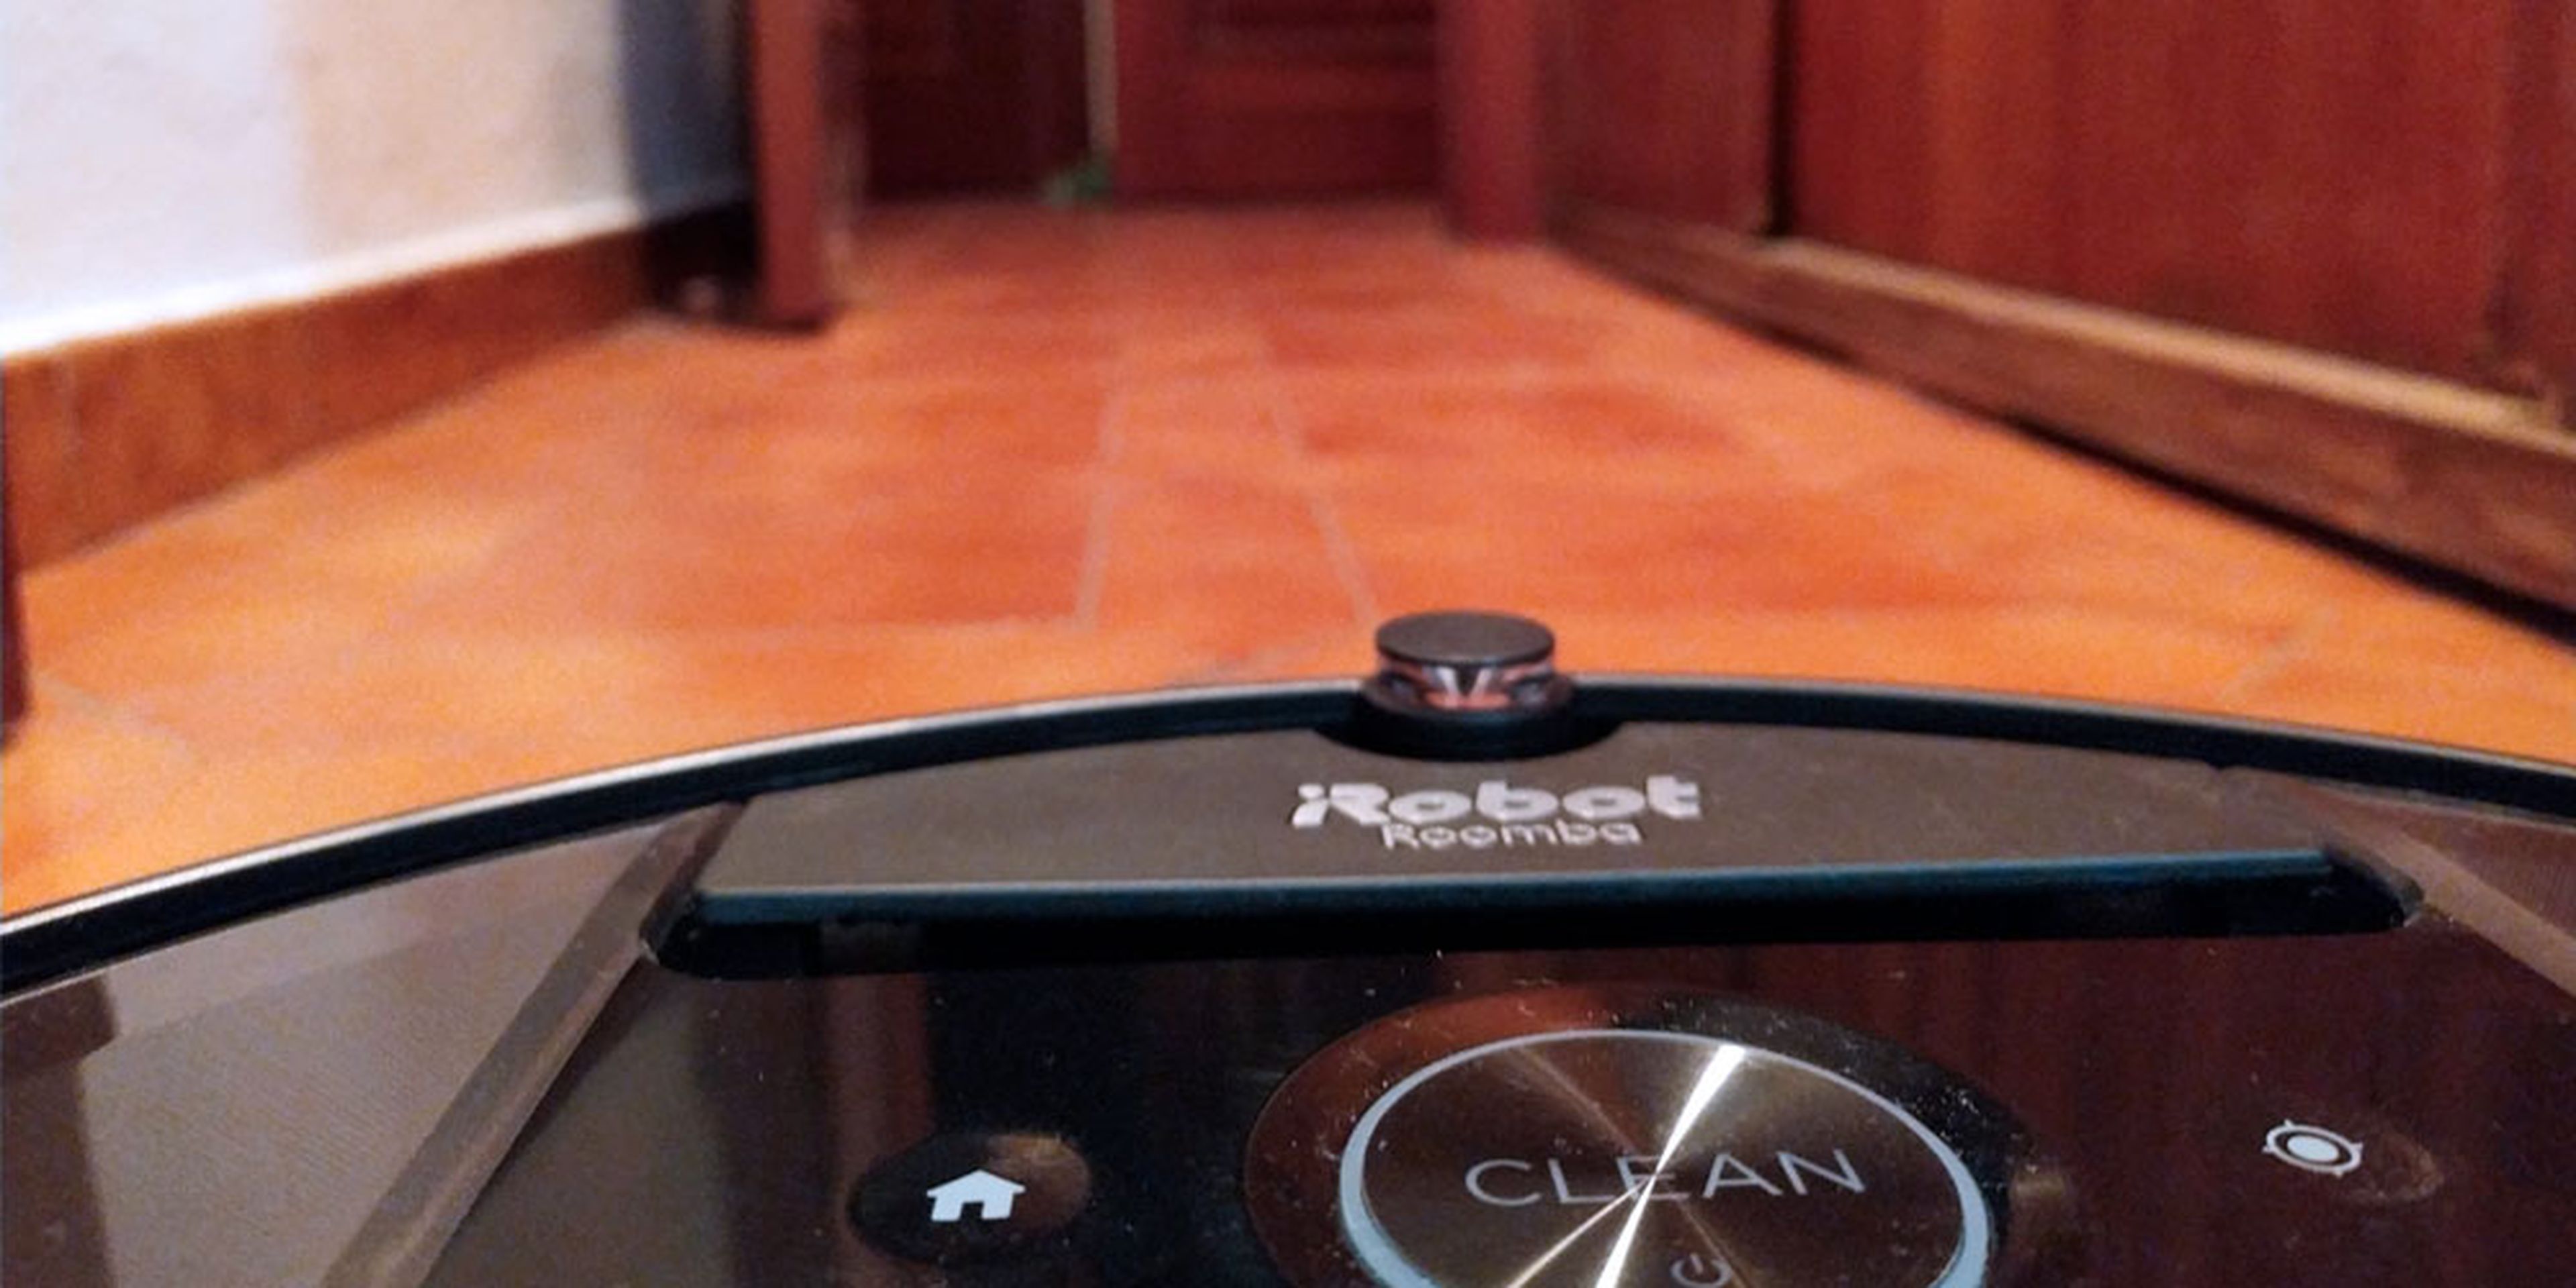 iRobot Roomba i7+, análisis: review con características, precio y